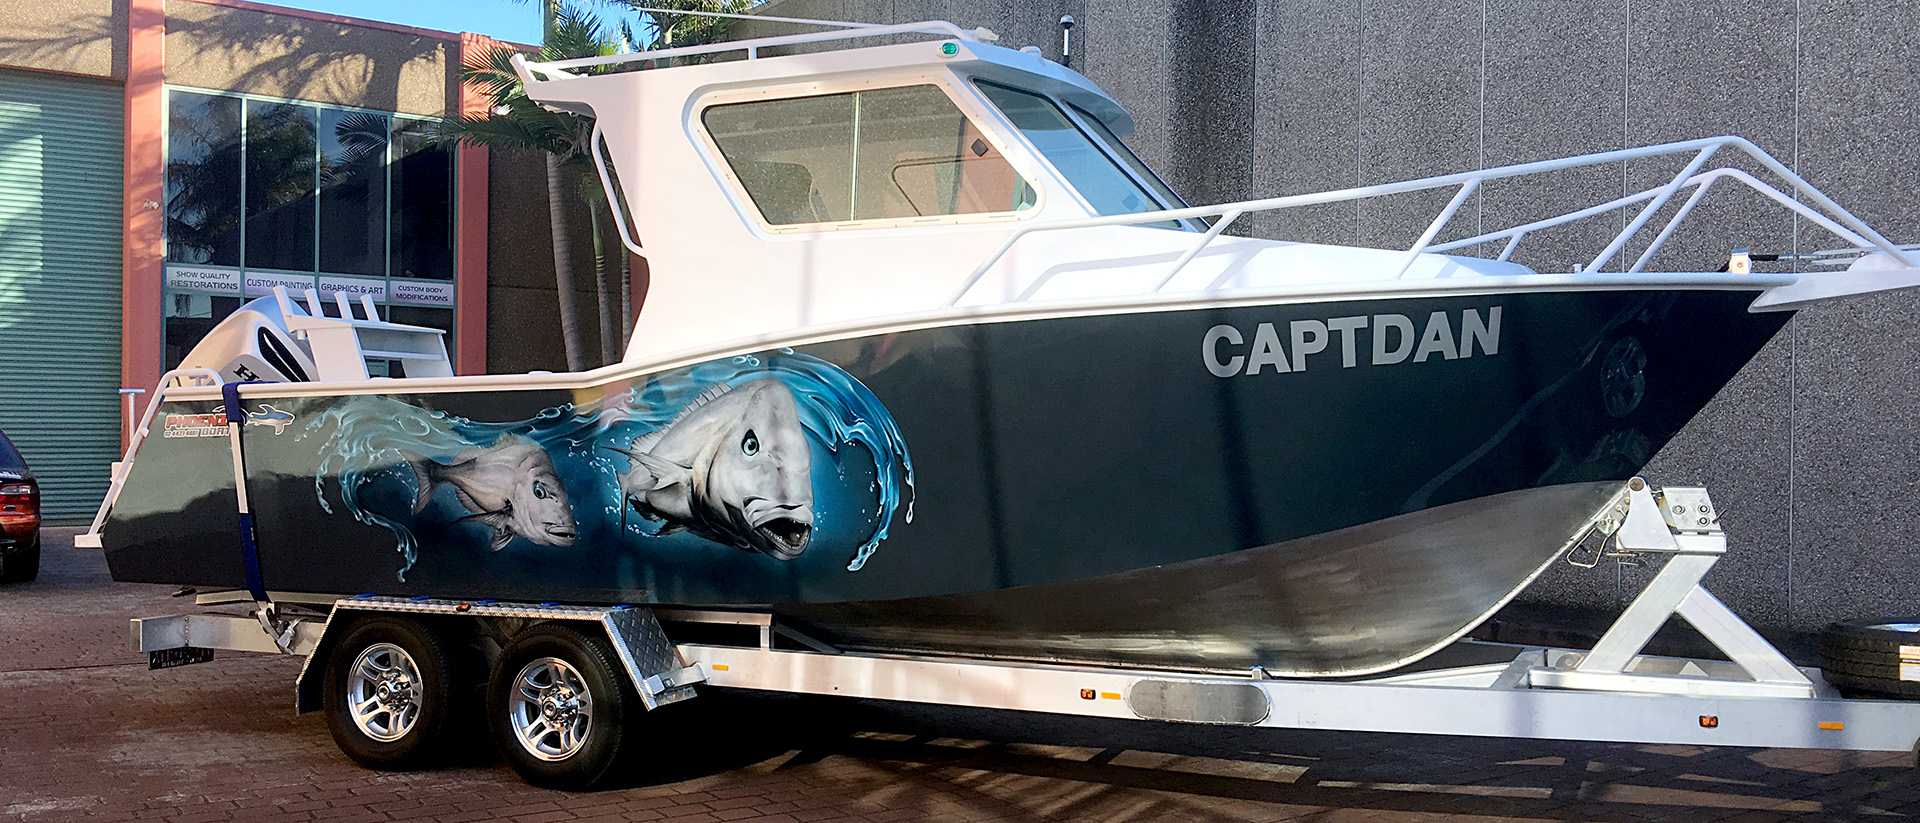 CAPTDAN Boat